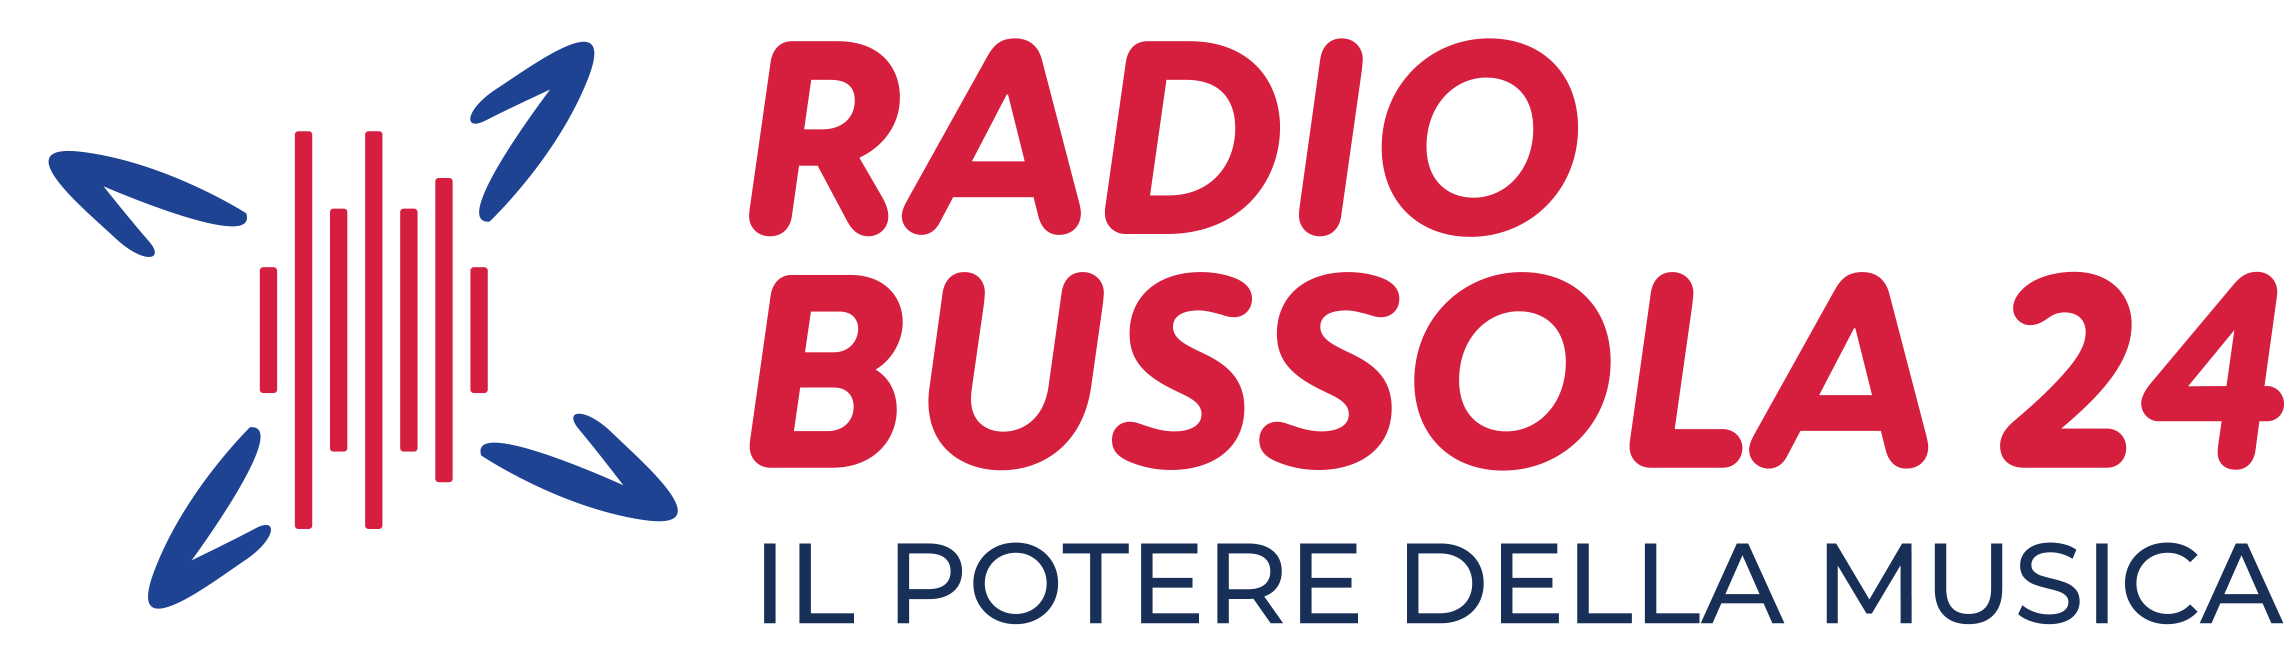 Radio-bussola_new